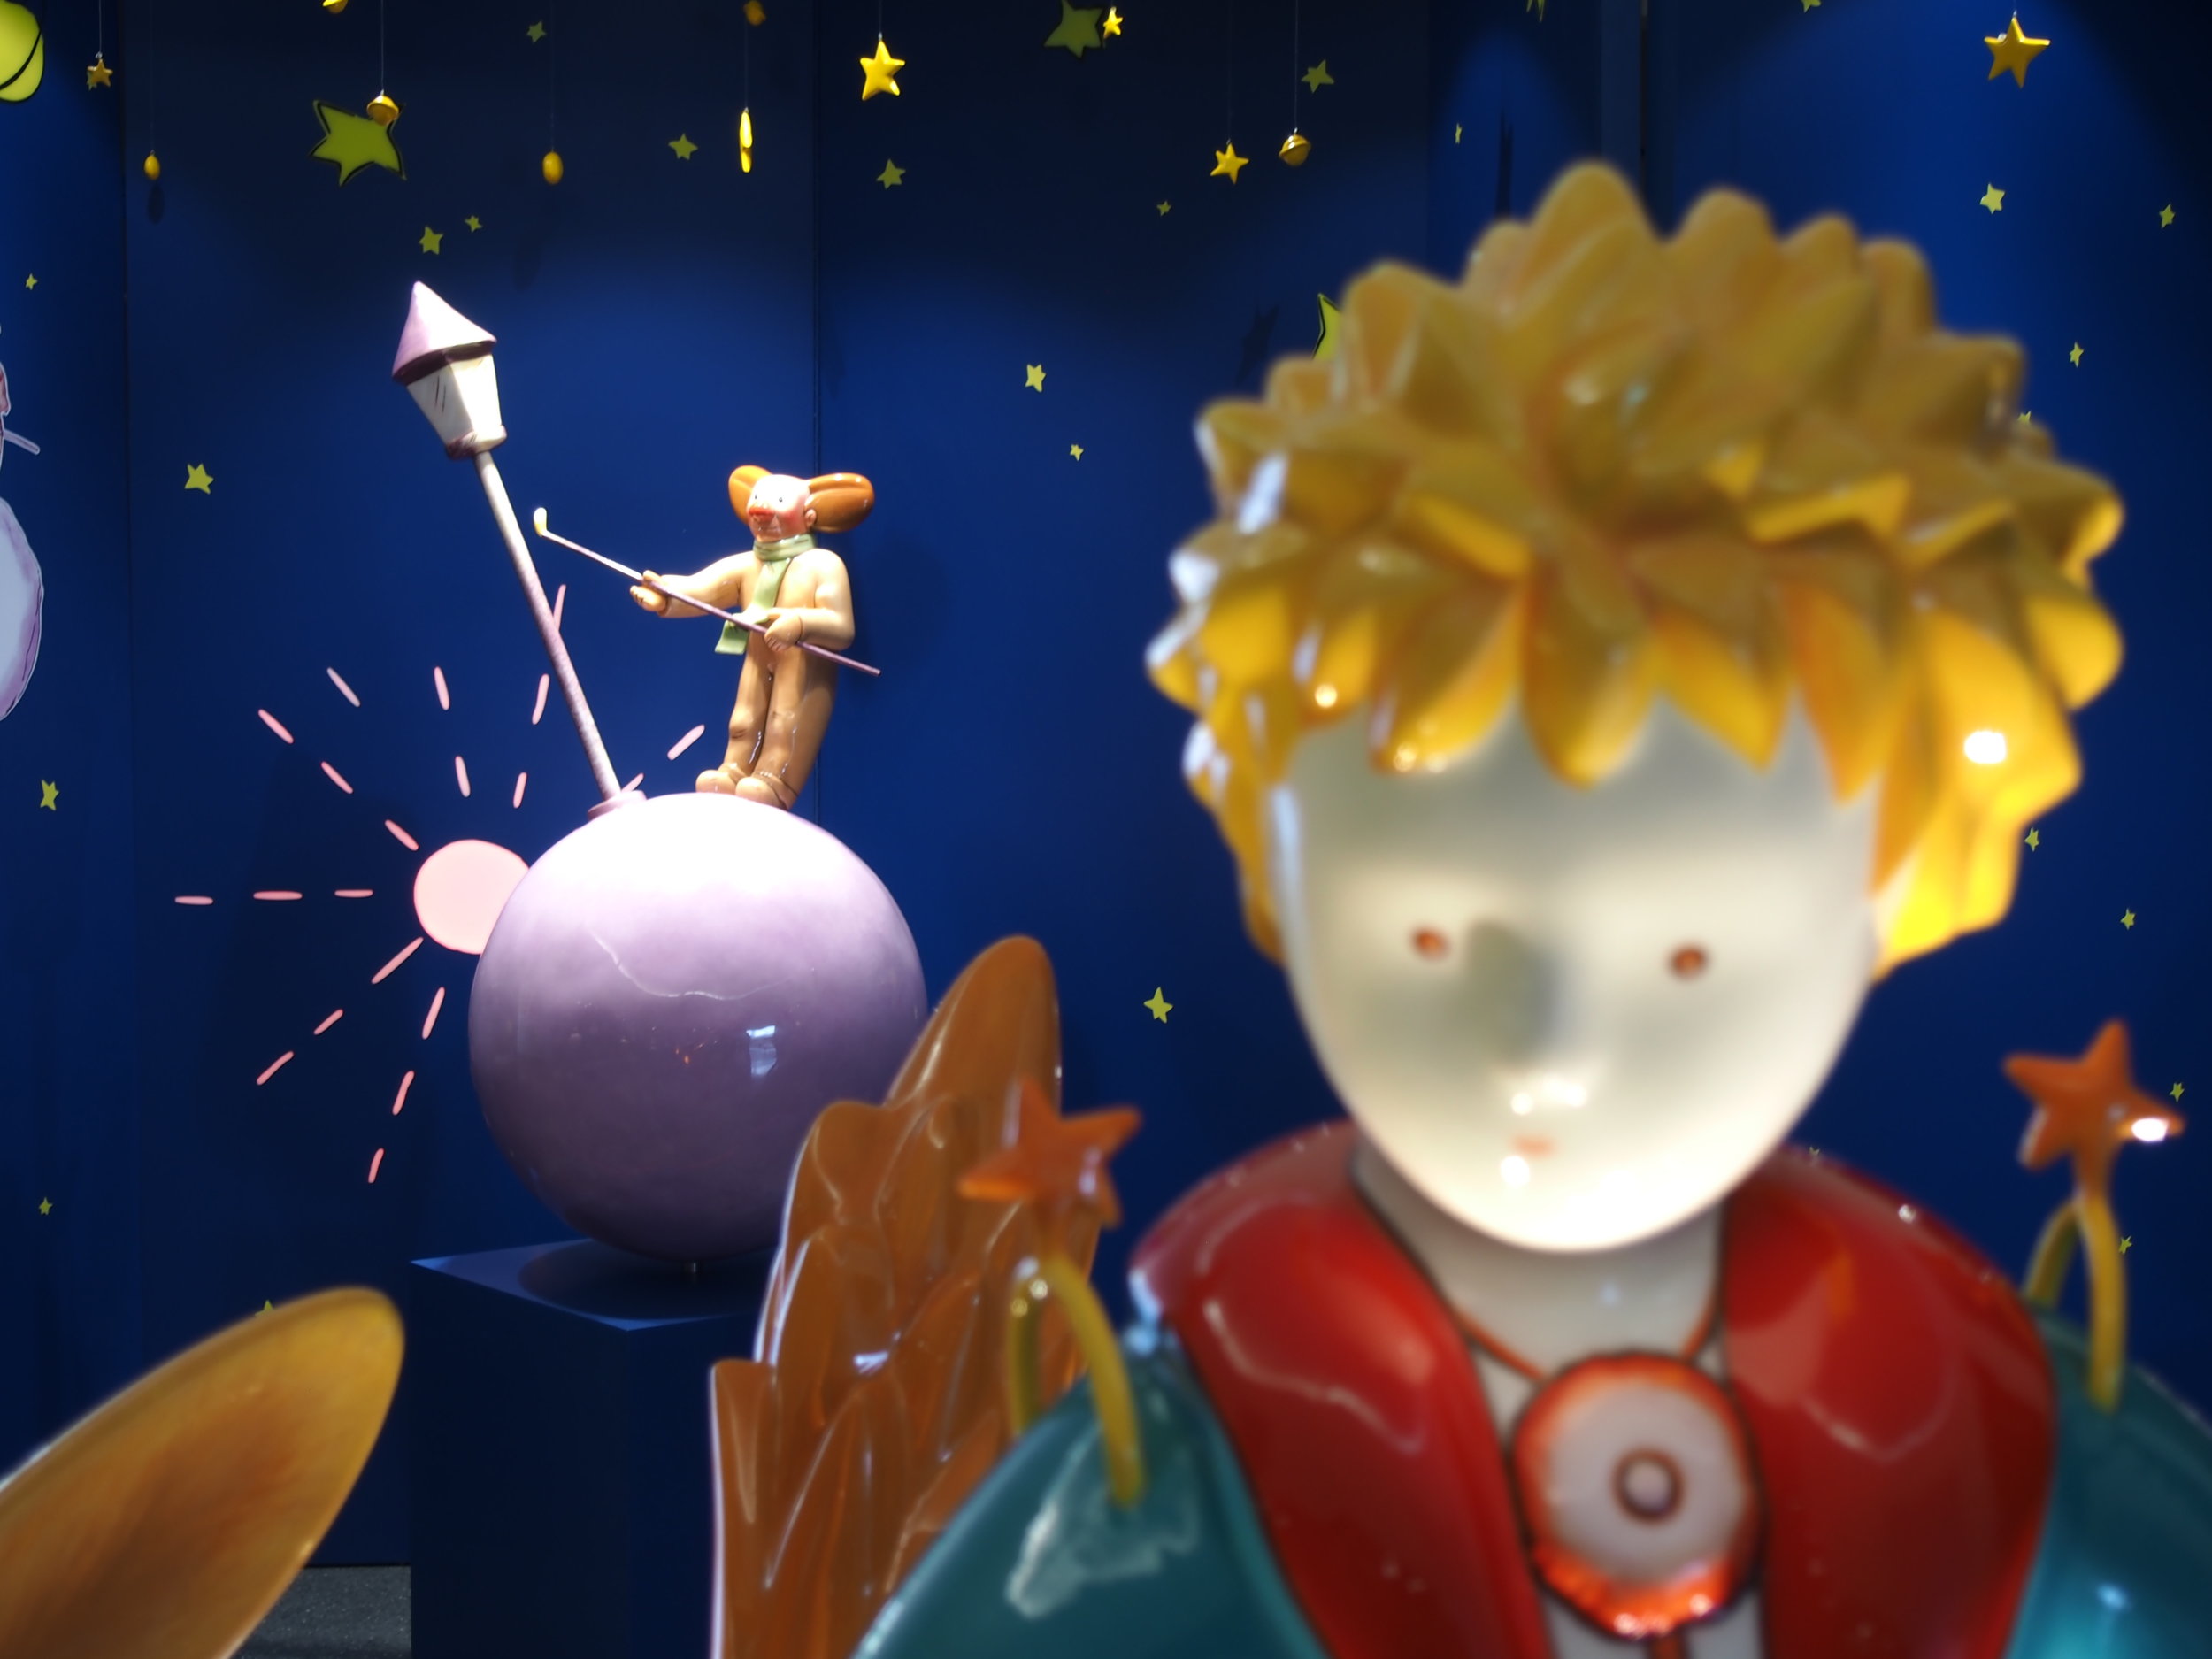 Little Prince Lamplighter exhibition artist Arnaud Nazare-Aga Art Collection